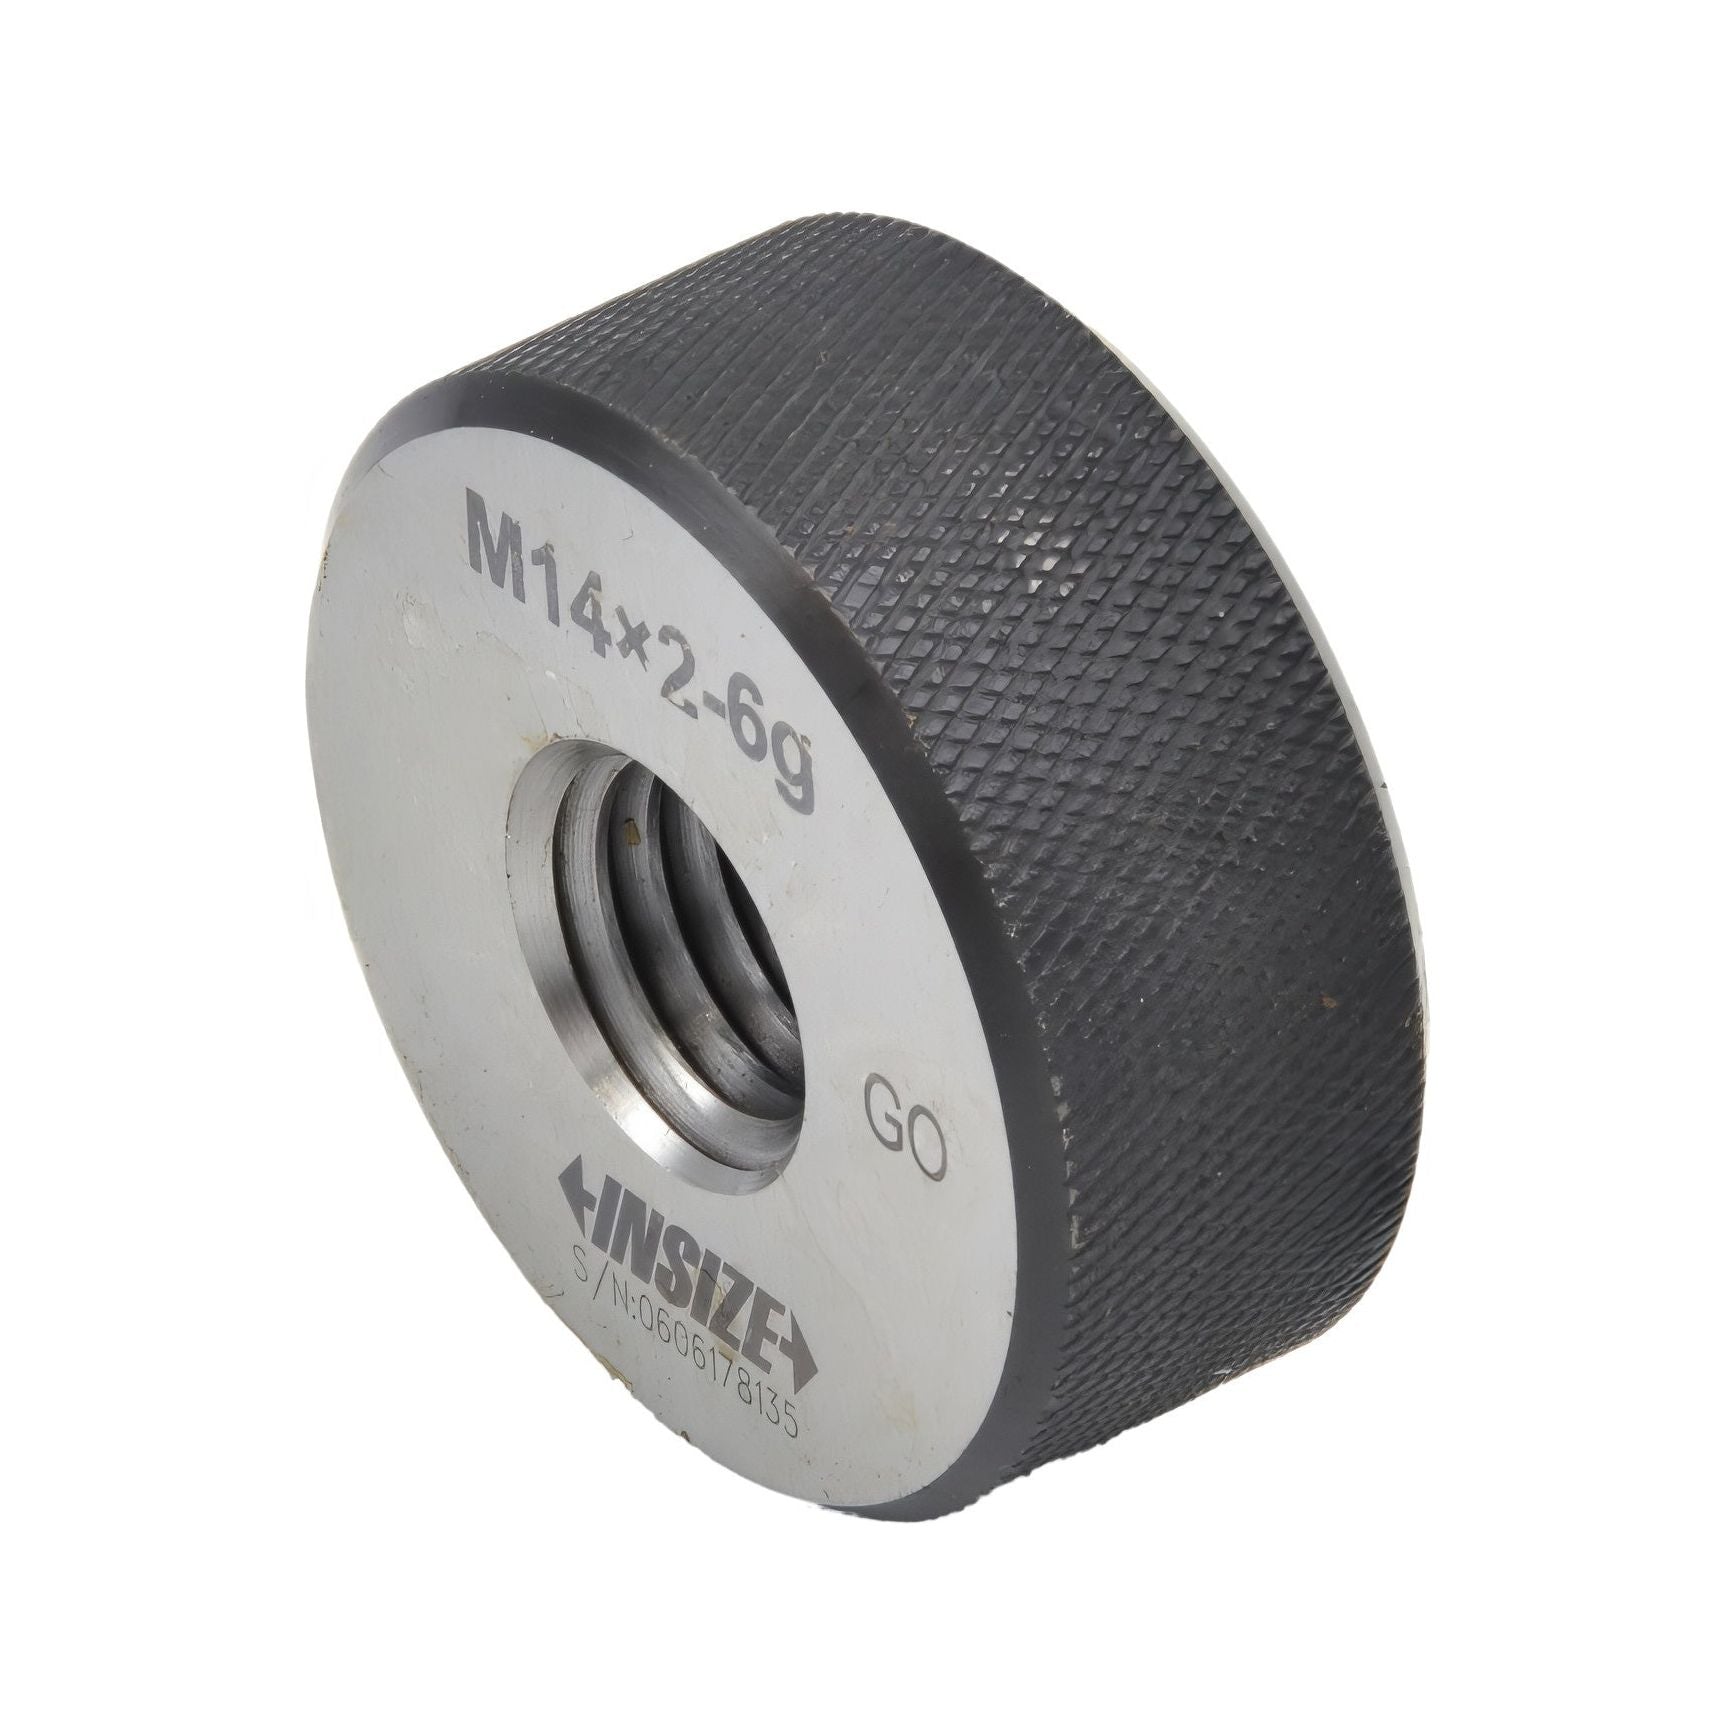 Insize GO Thread Ring Gauge M14X2 Series 4120-14